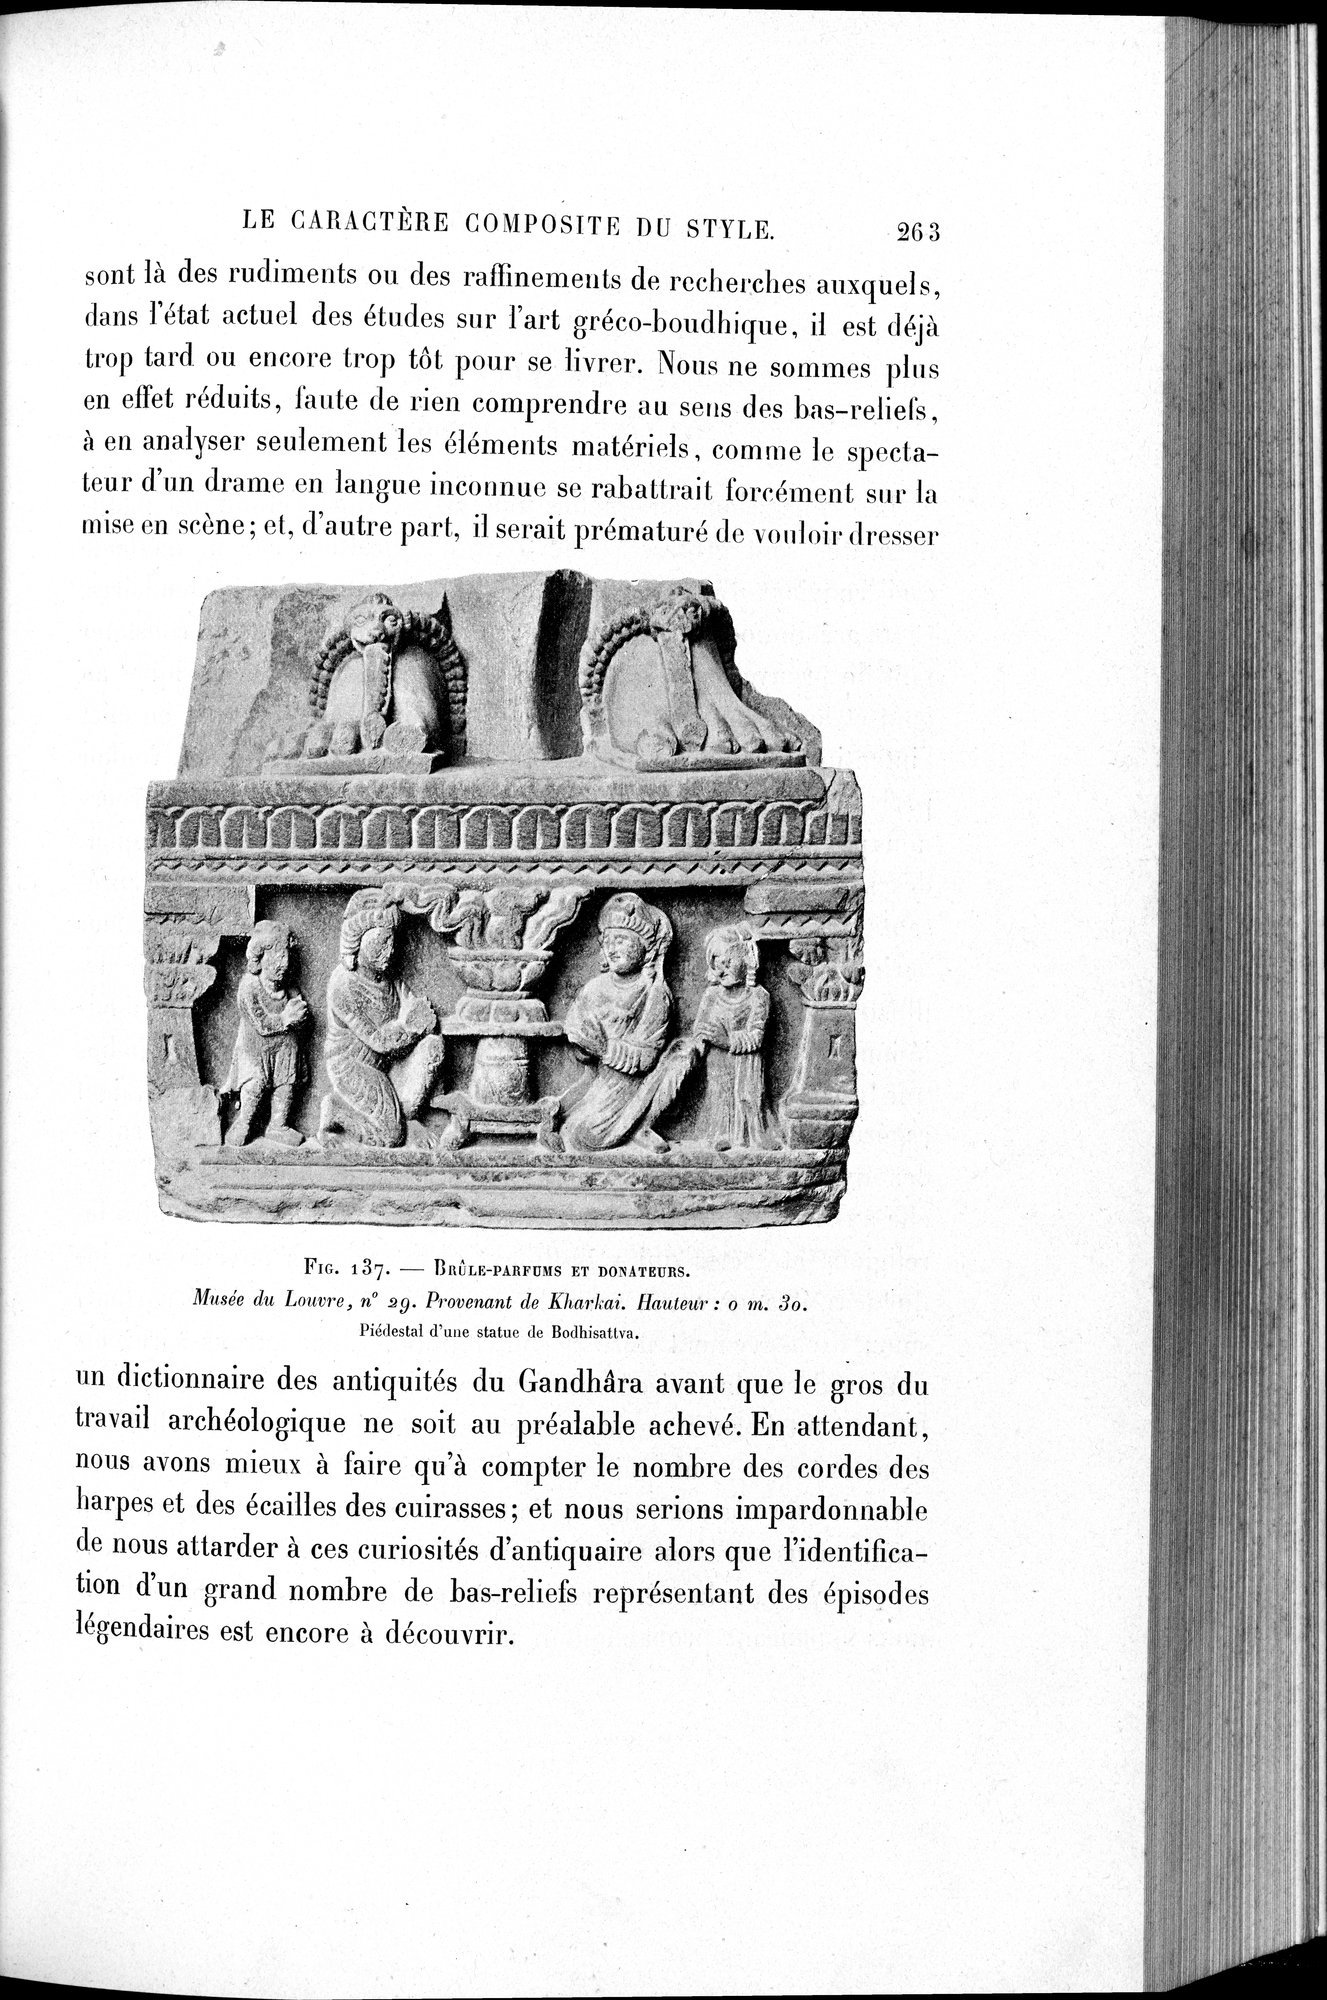 L'art Greco-Bouddhique du Gandhâra : vol.1 / Page 289 (Grayscale High Resolution Image)